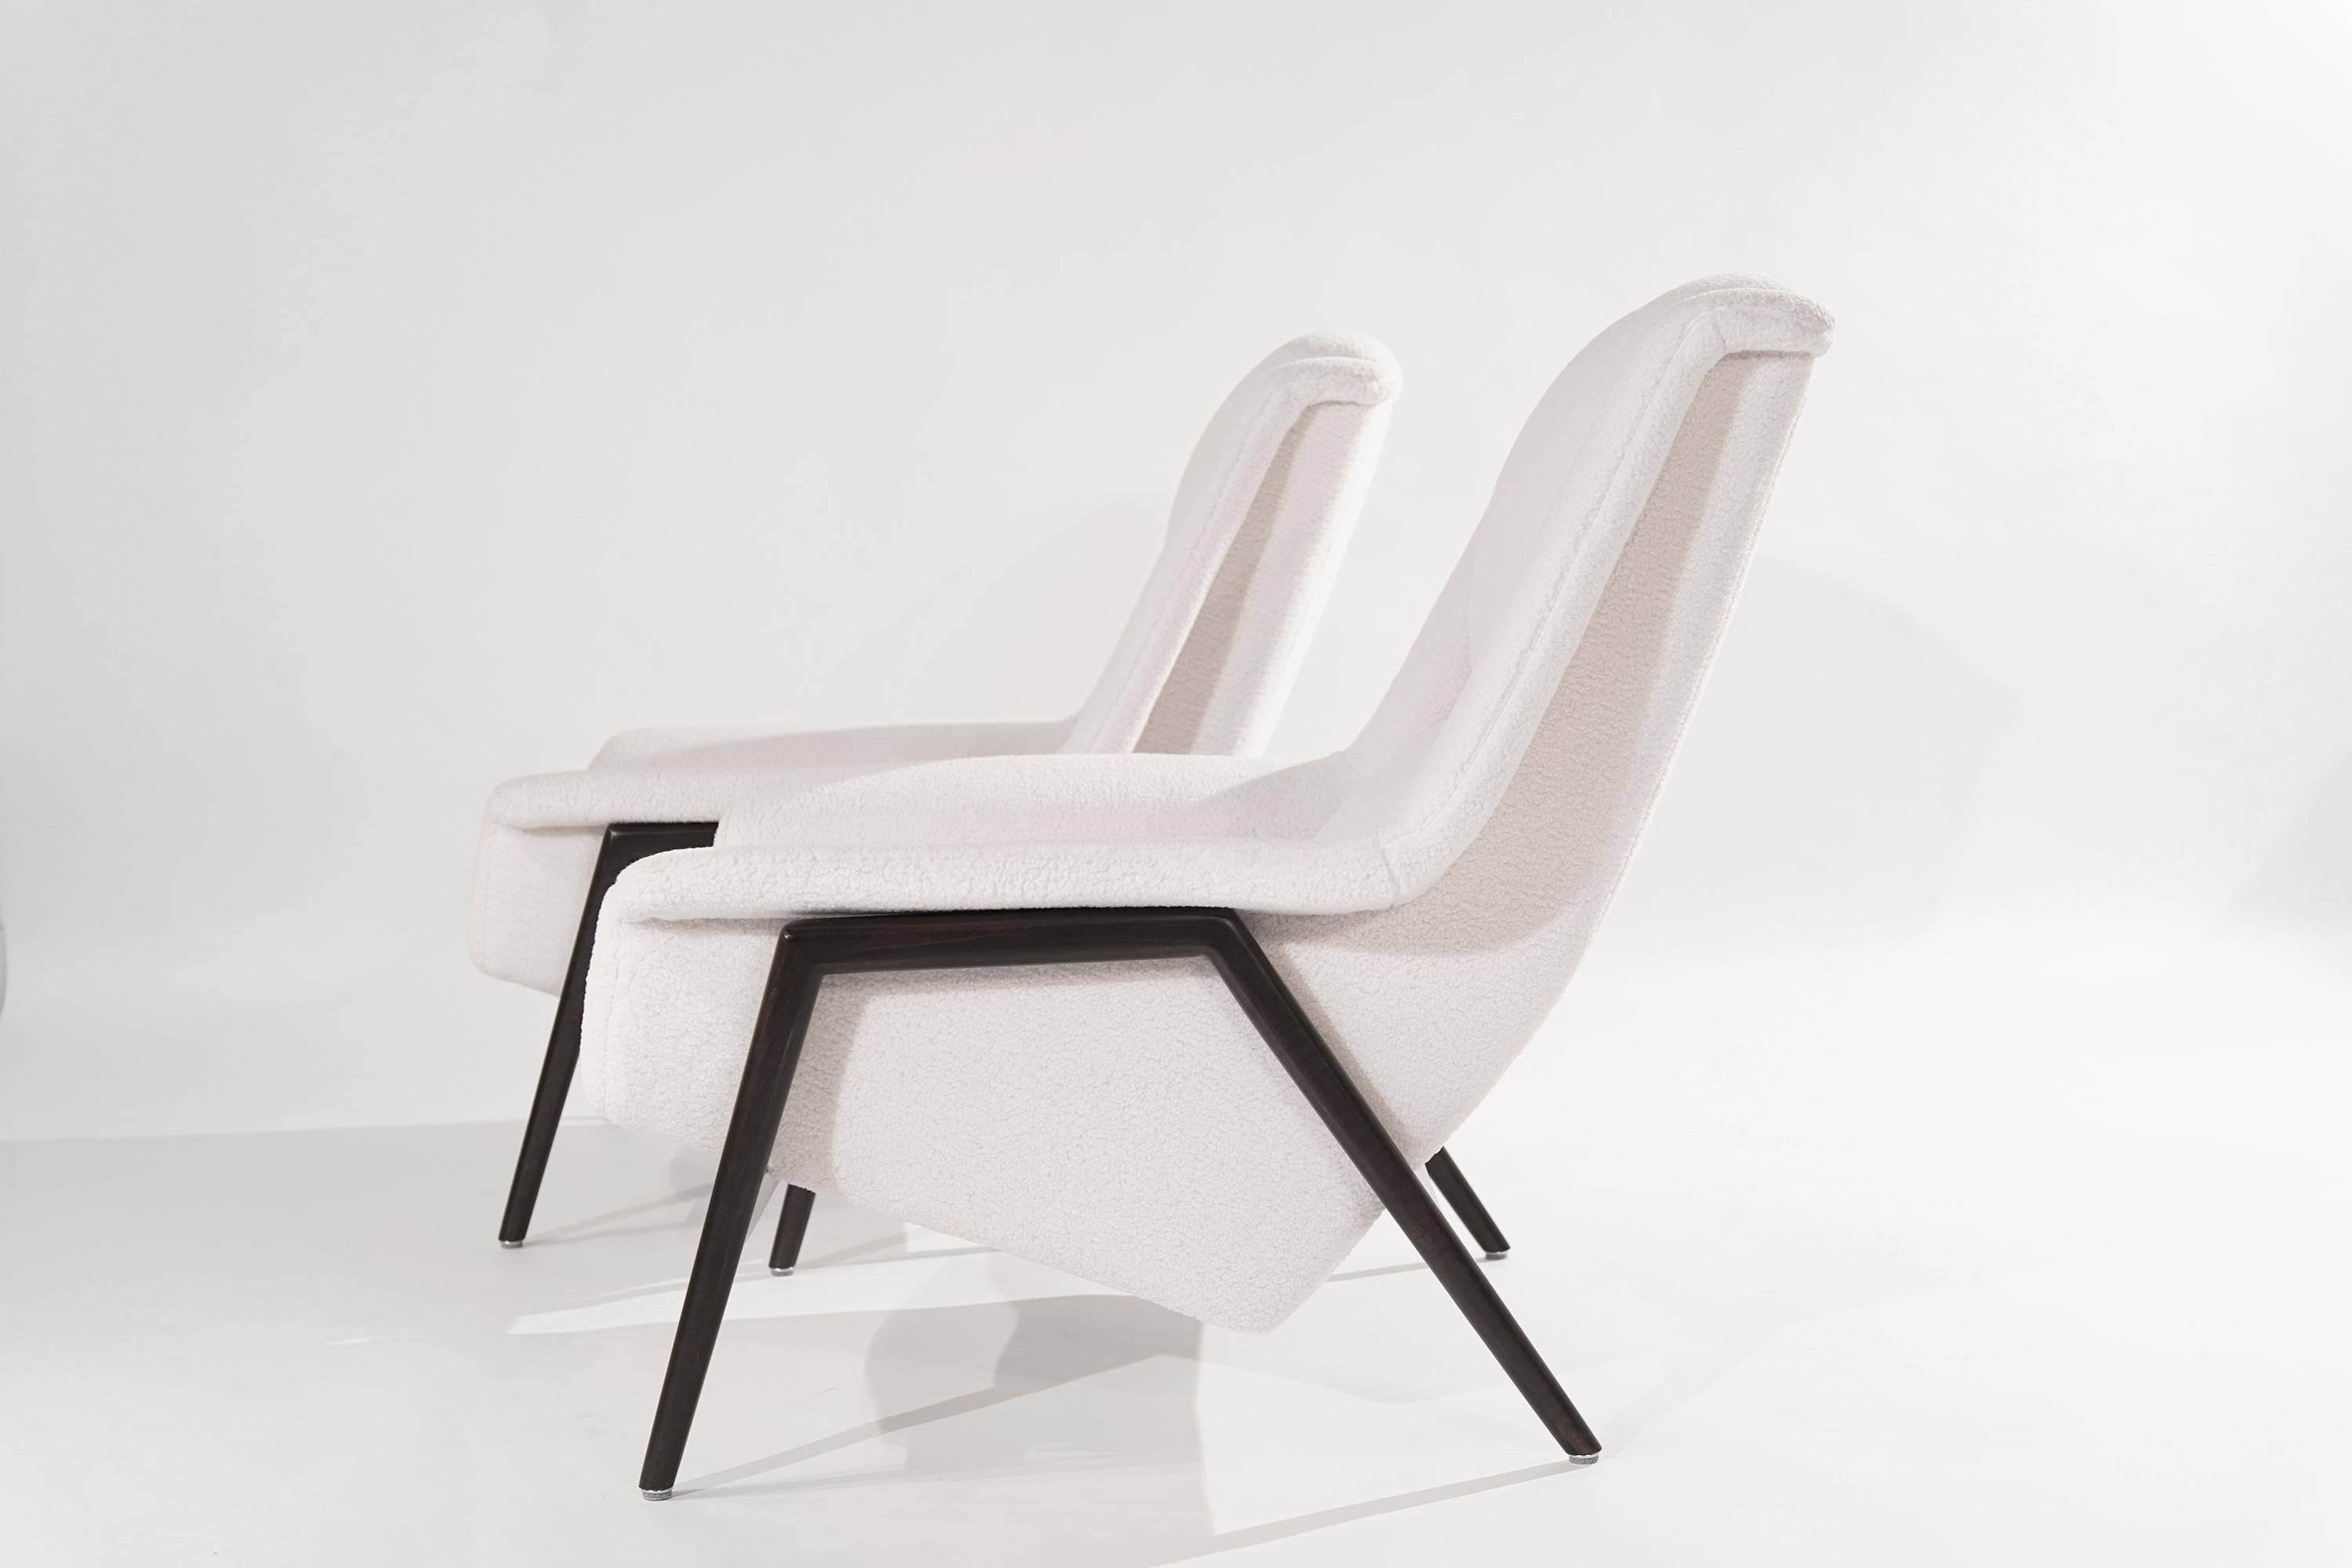 20th Century Scandinavian-Modern Lounge Chairs by DUX, Sweden 1960s